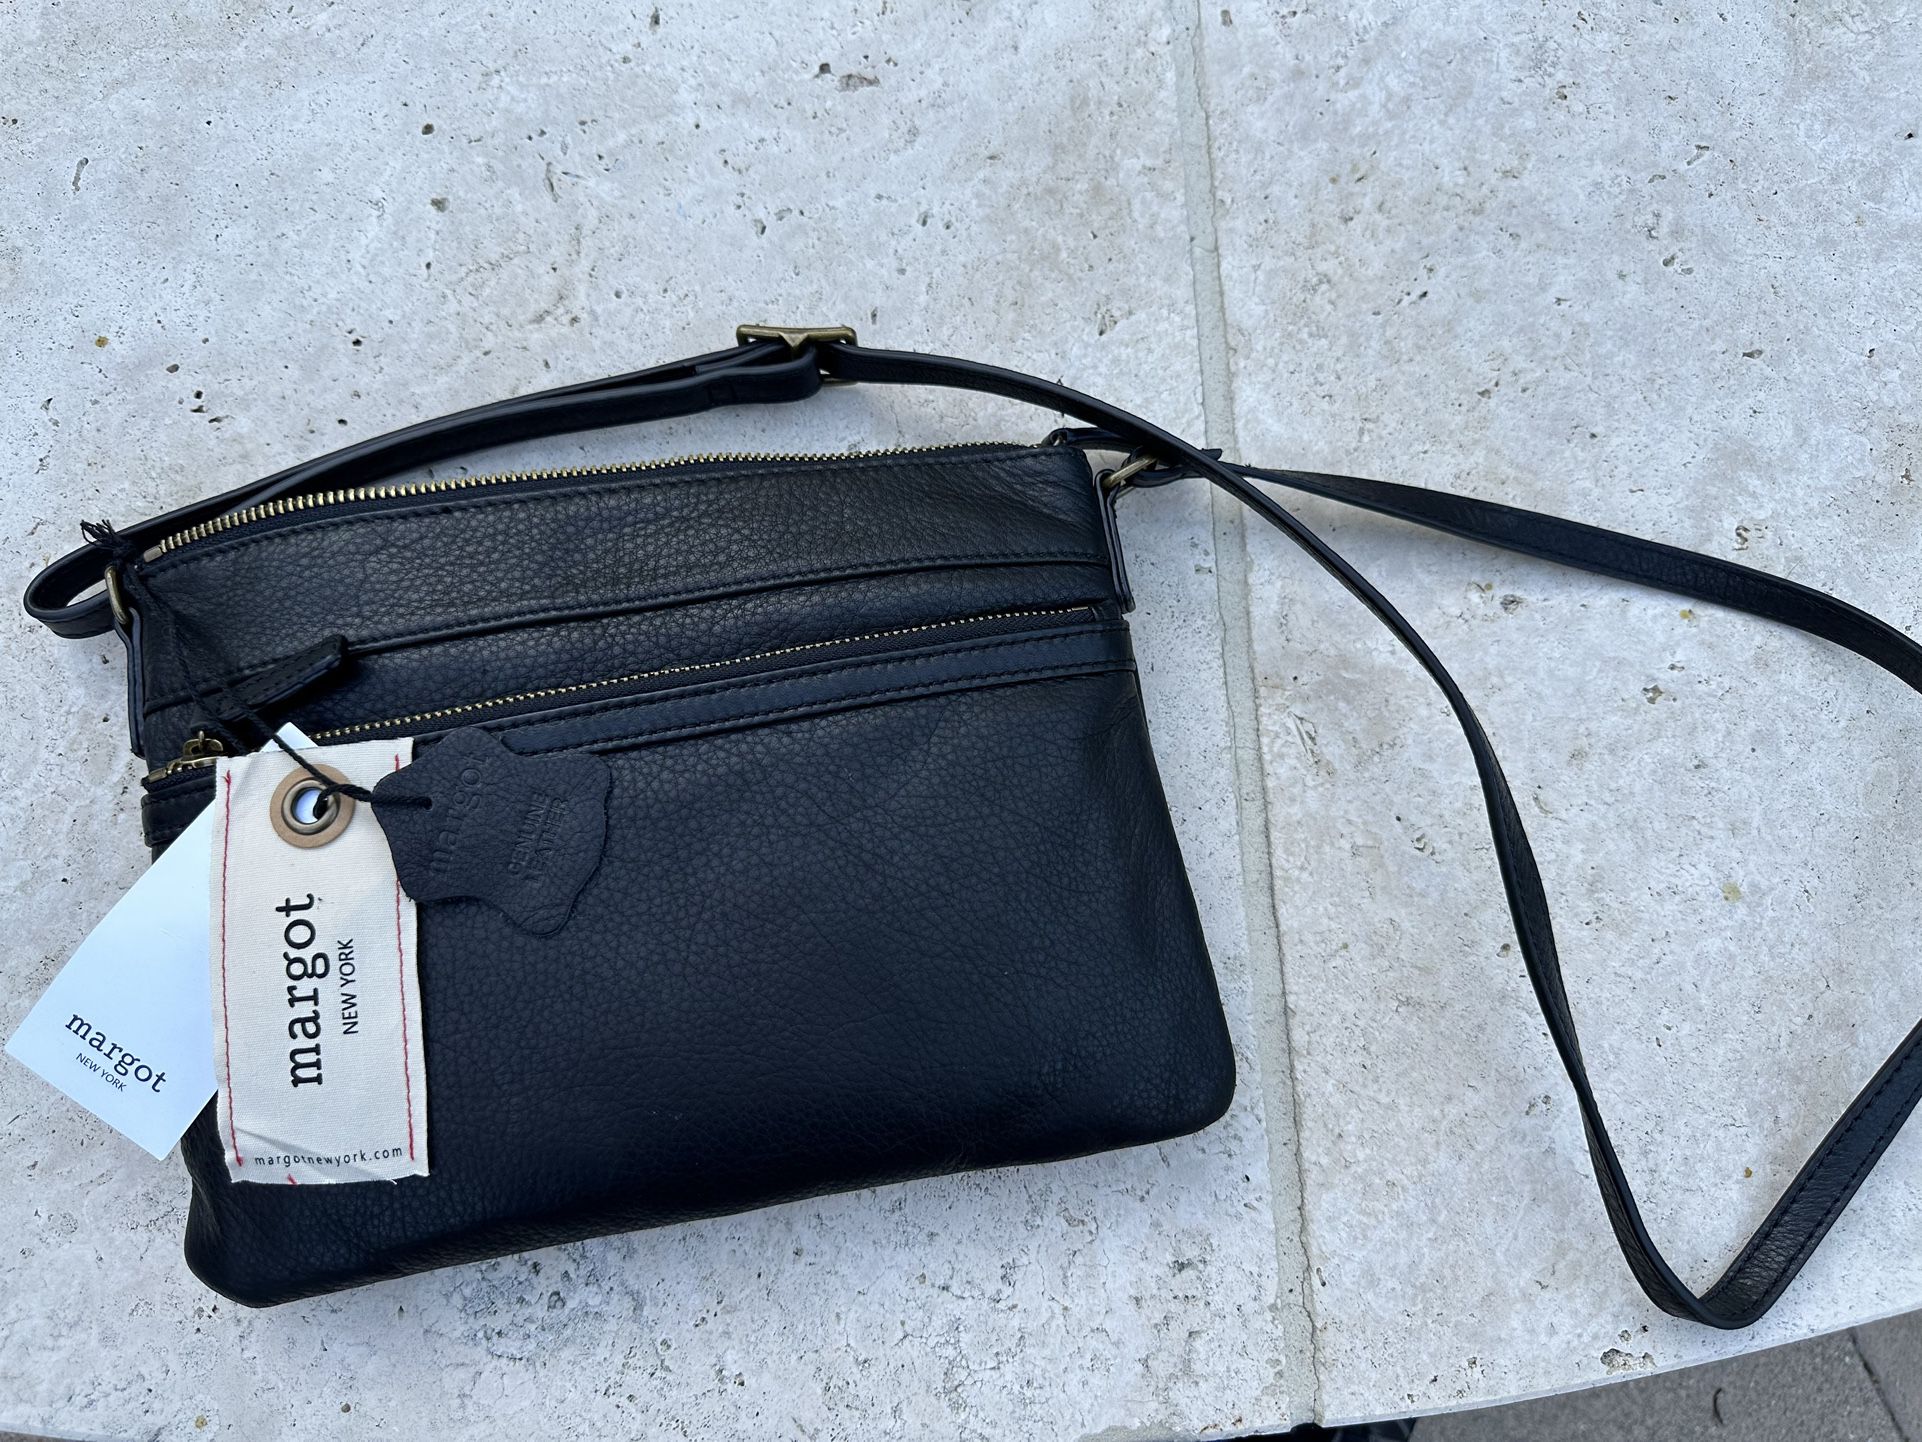 Margot New York crossbody black leather purse. brand new!